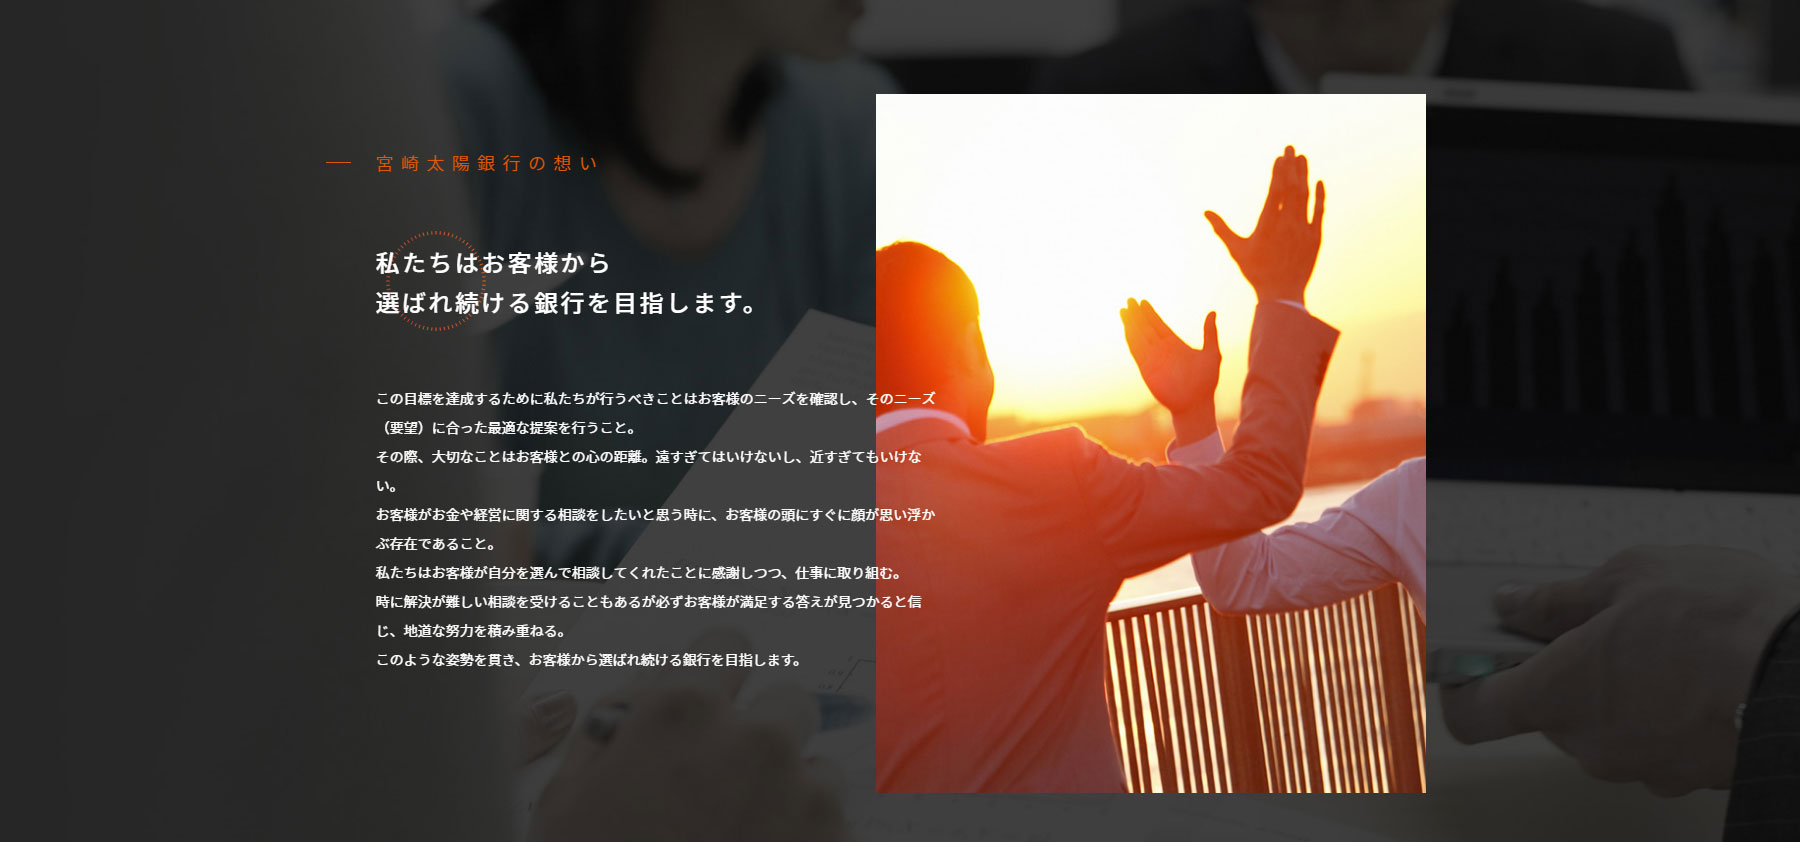 MiyazakiTaiyoBank Recruitment Site - Website of the Day